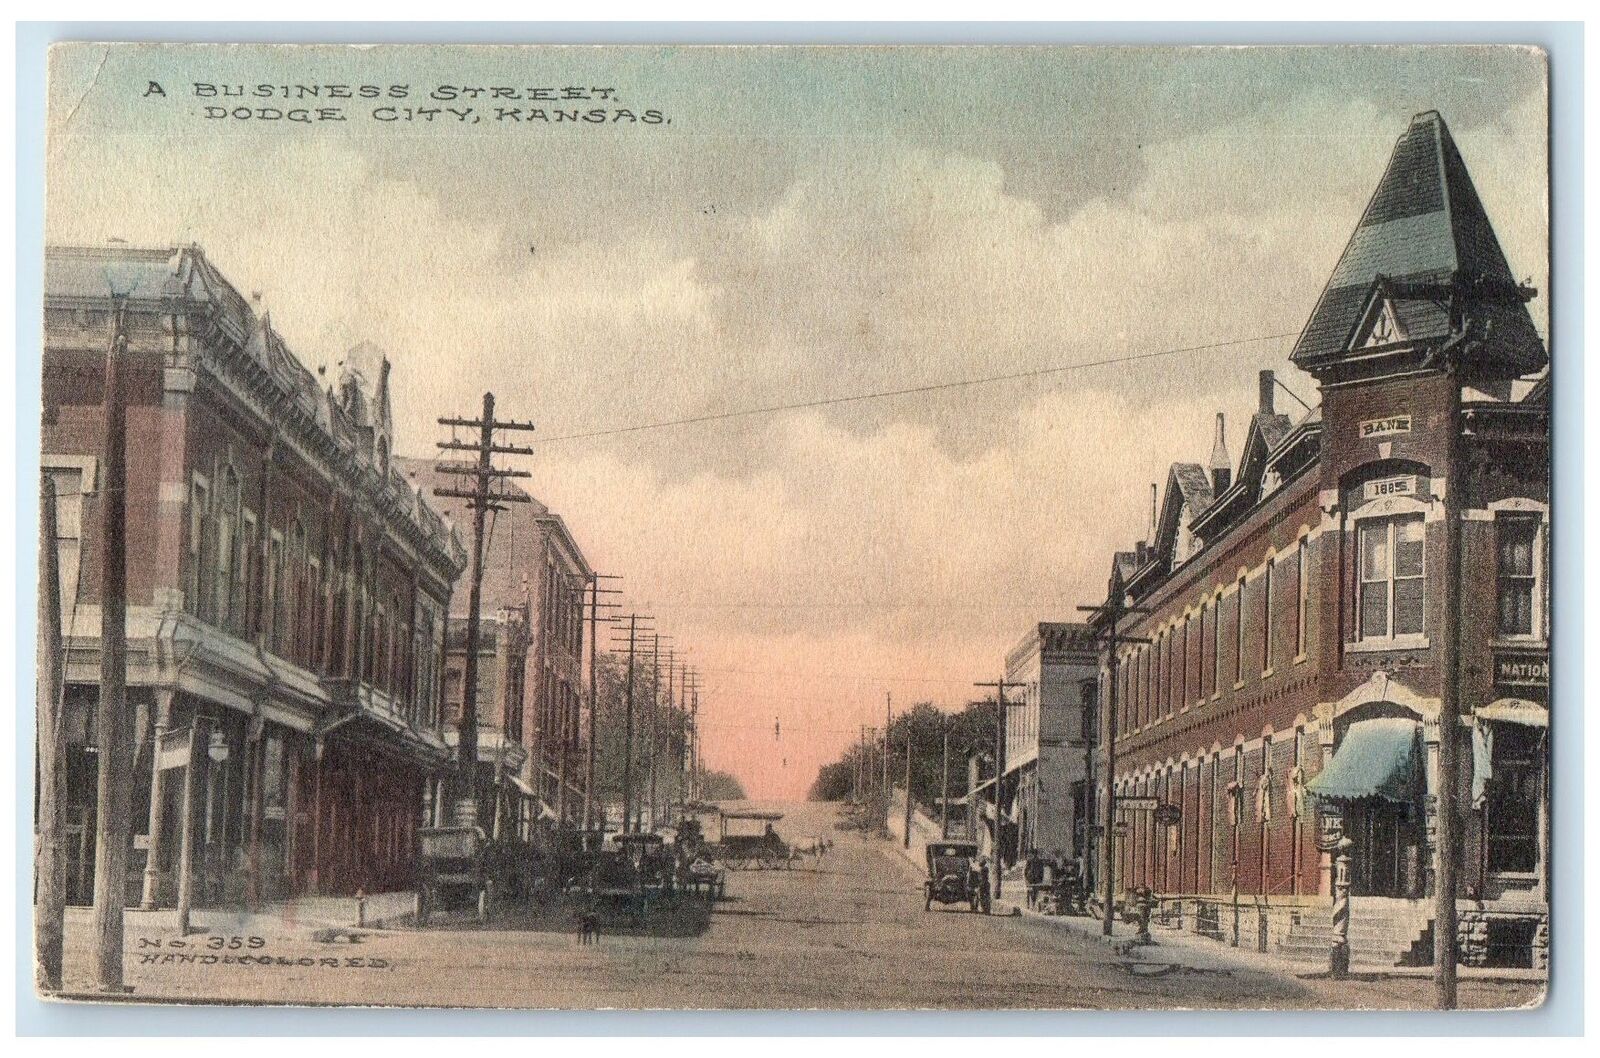 1915 A Business Street Buildings Scene Dodge City Kansas KS Carriages Postcard